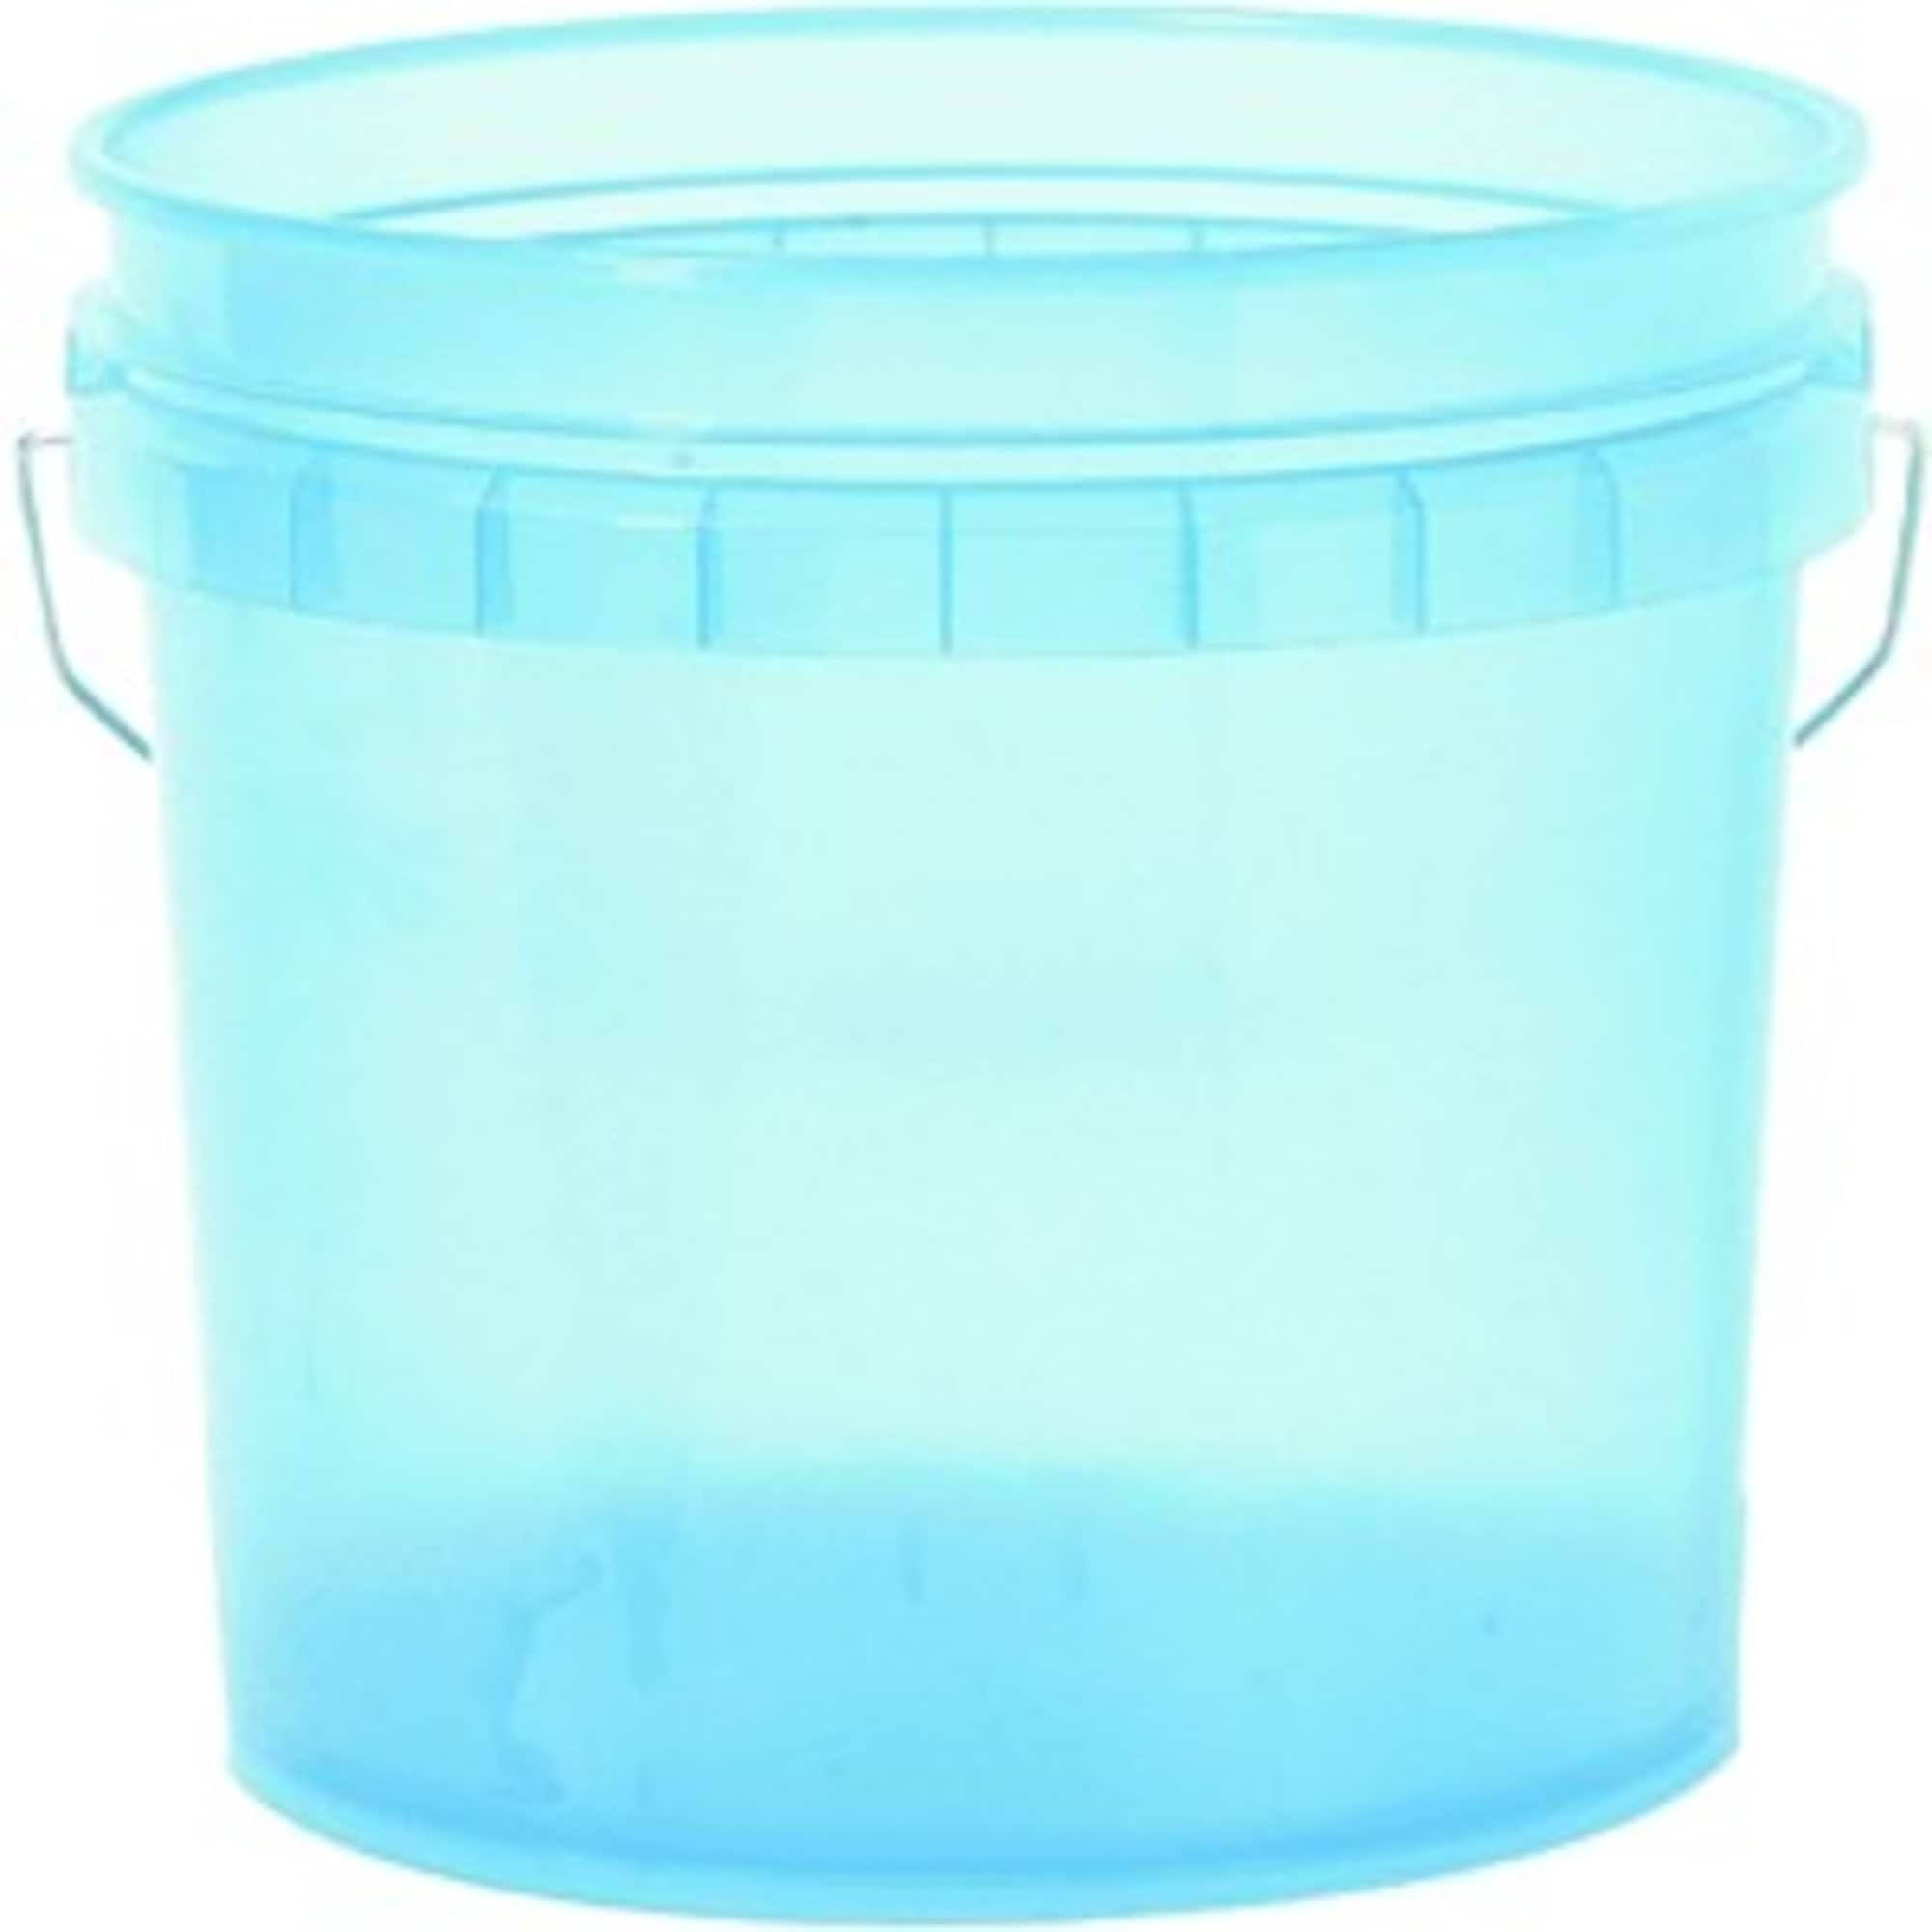 3.5 gal. BPA Free Food Grade Bucket - 1/2 Pallet 77 Units